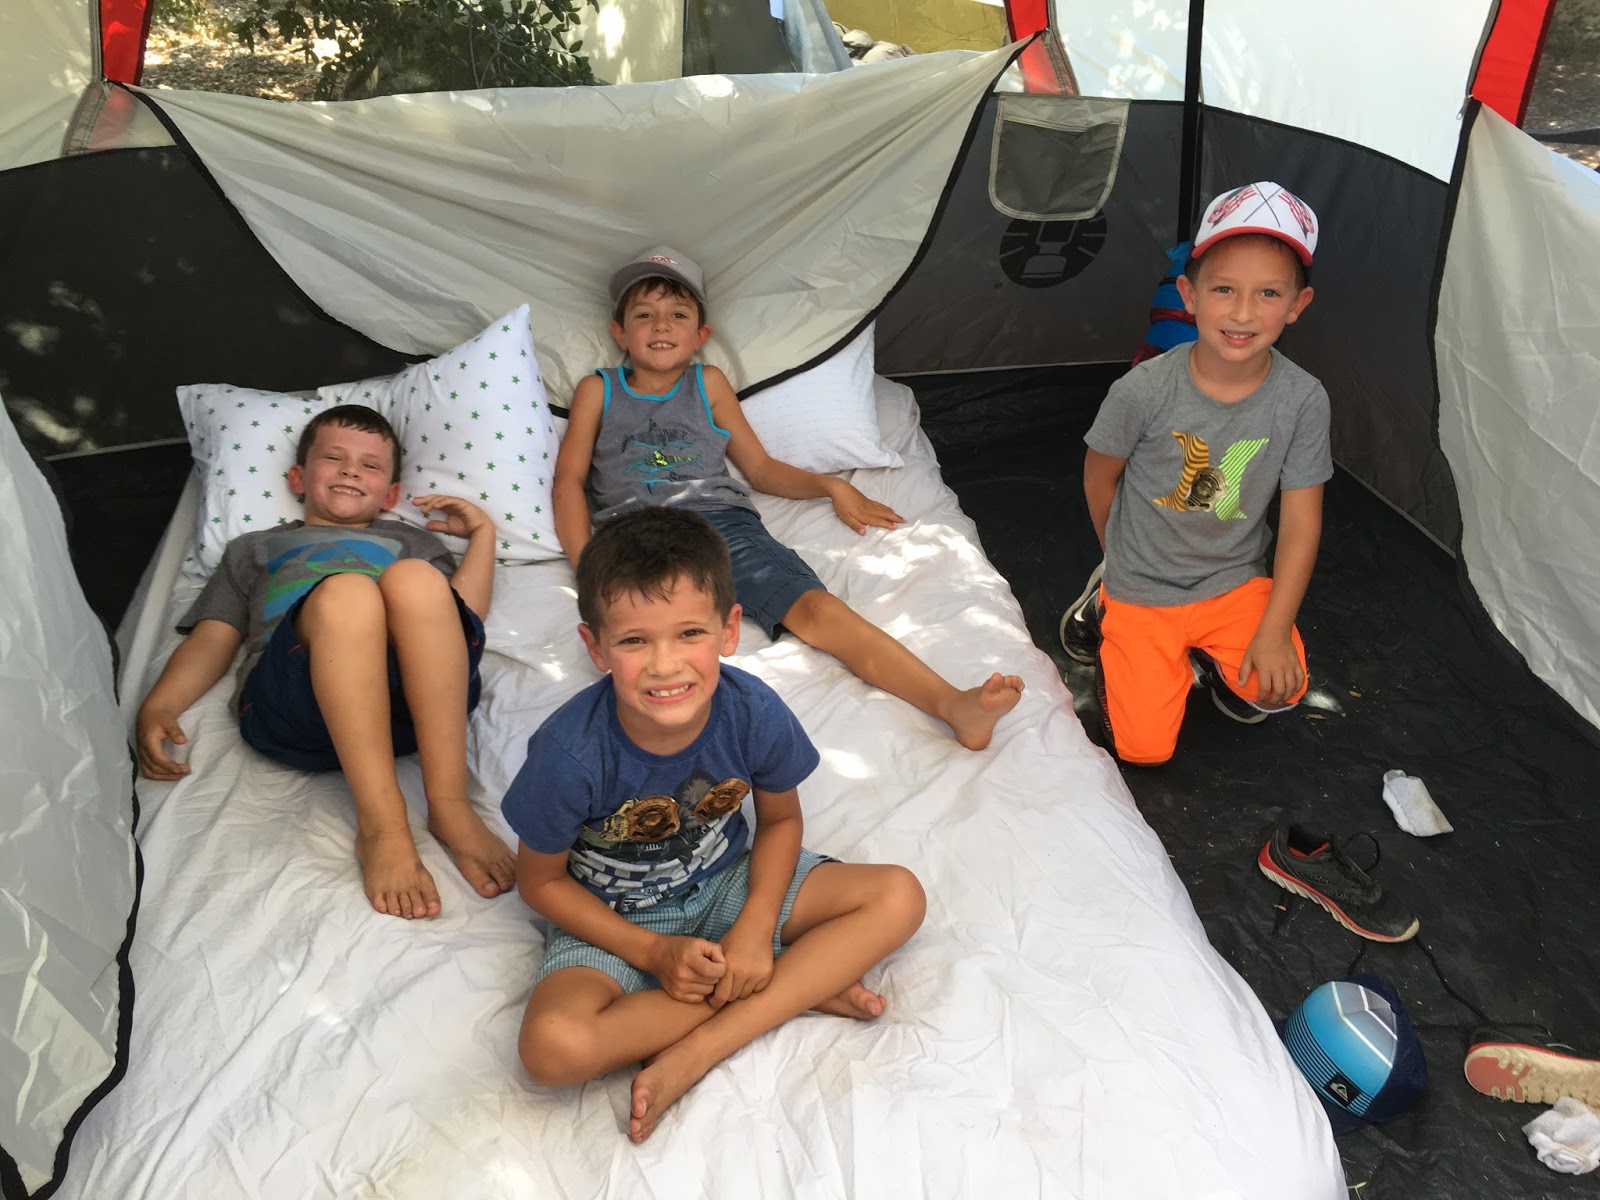 Camping boys